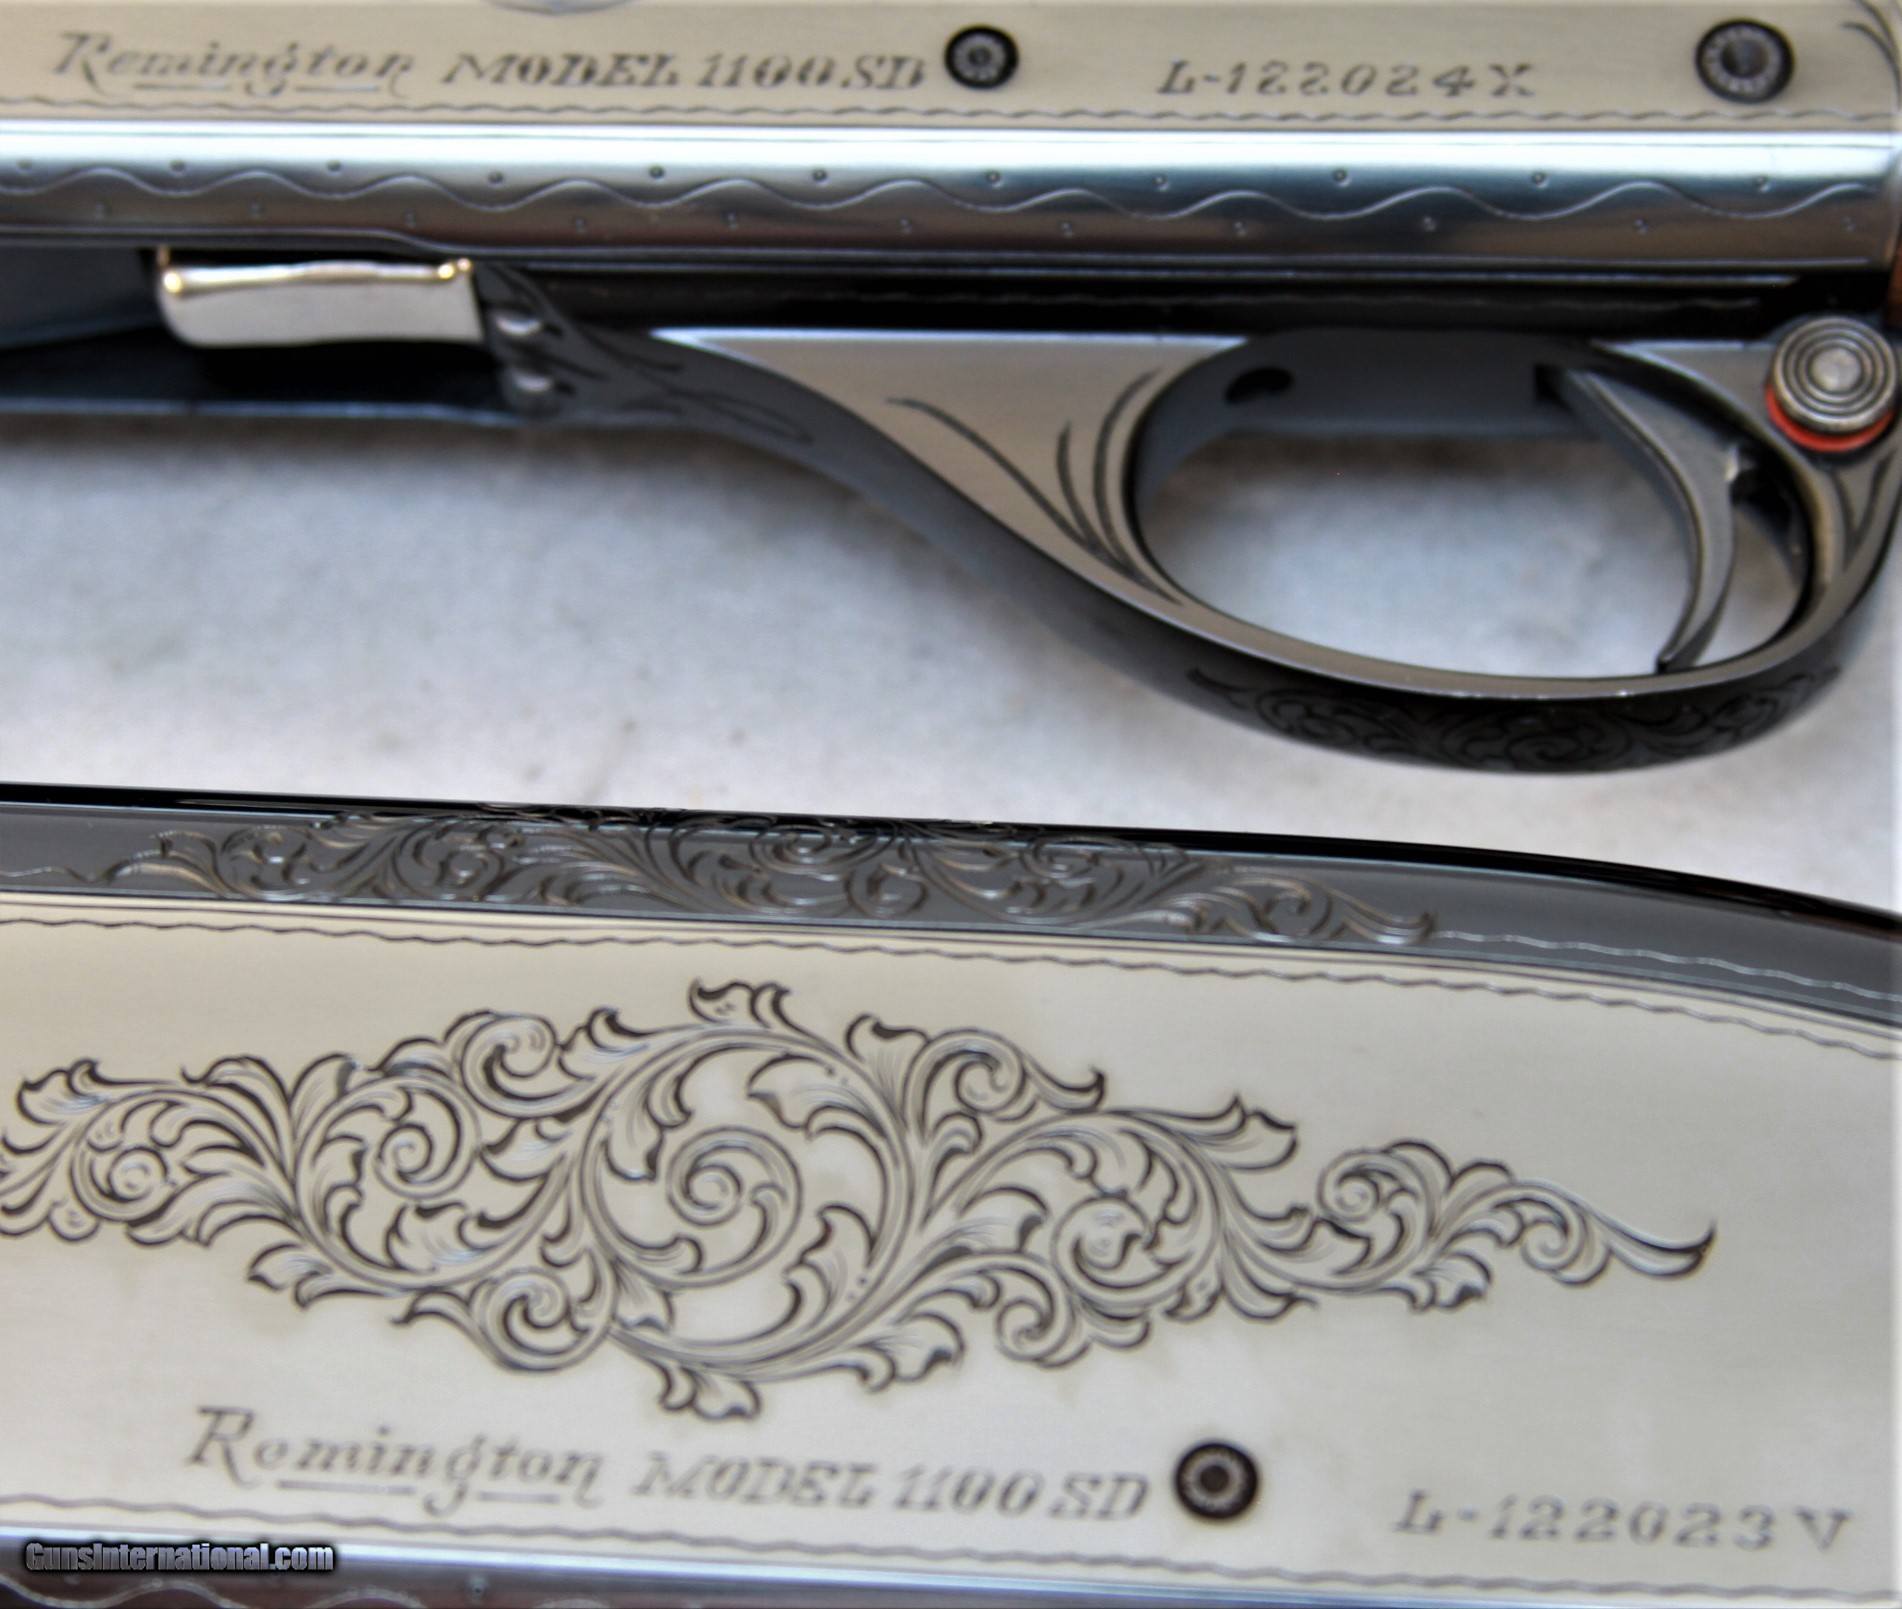 Remington 1100 SD Model Four Gun Set Consecutive Serial Numbers.